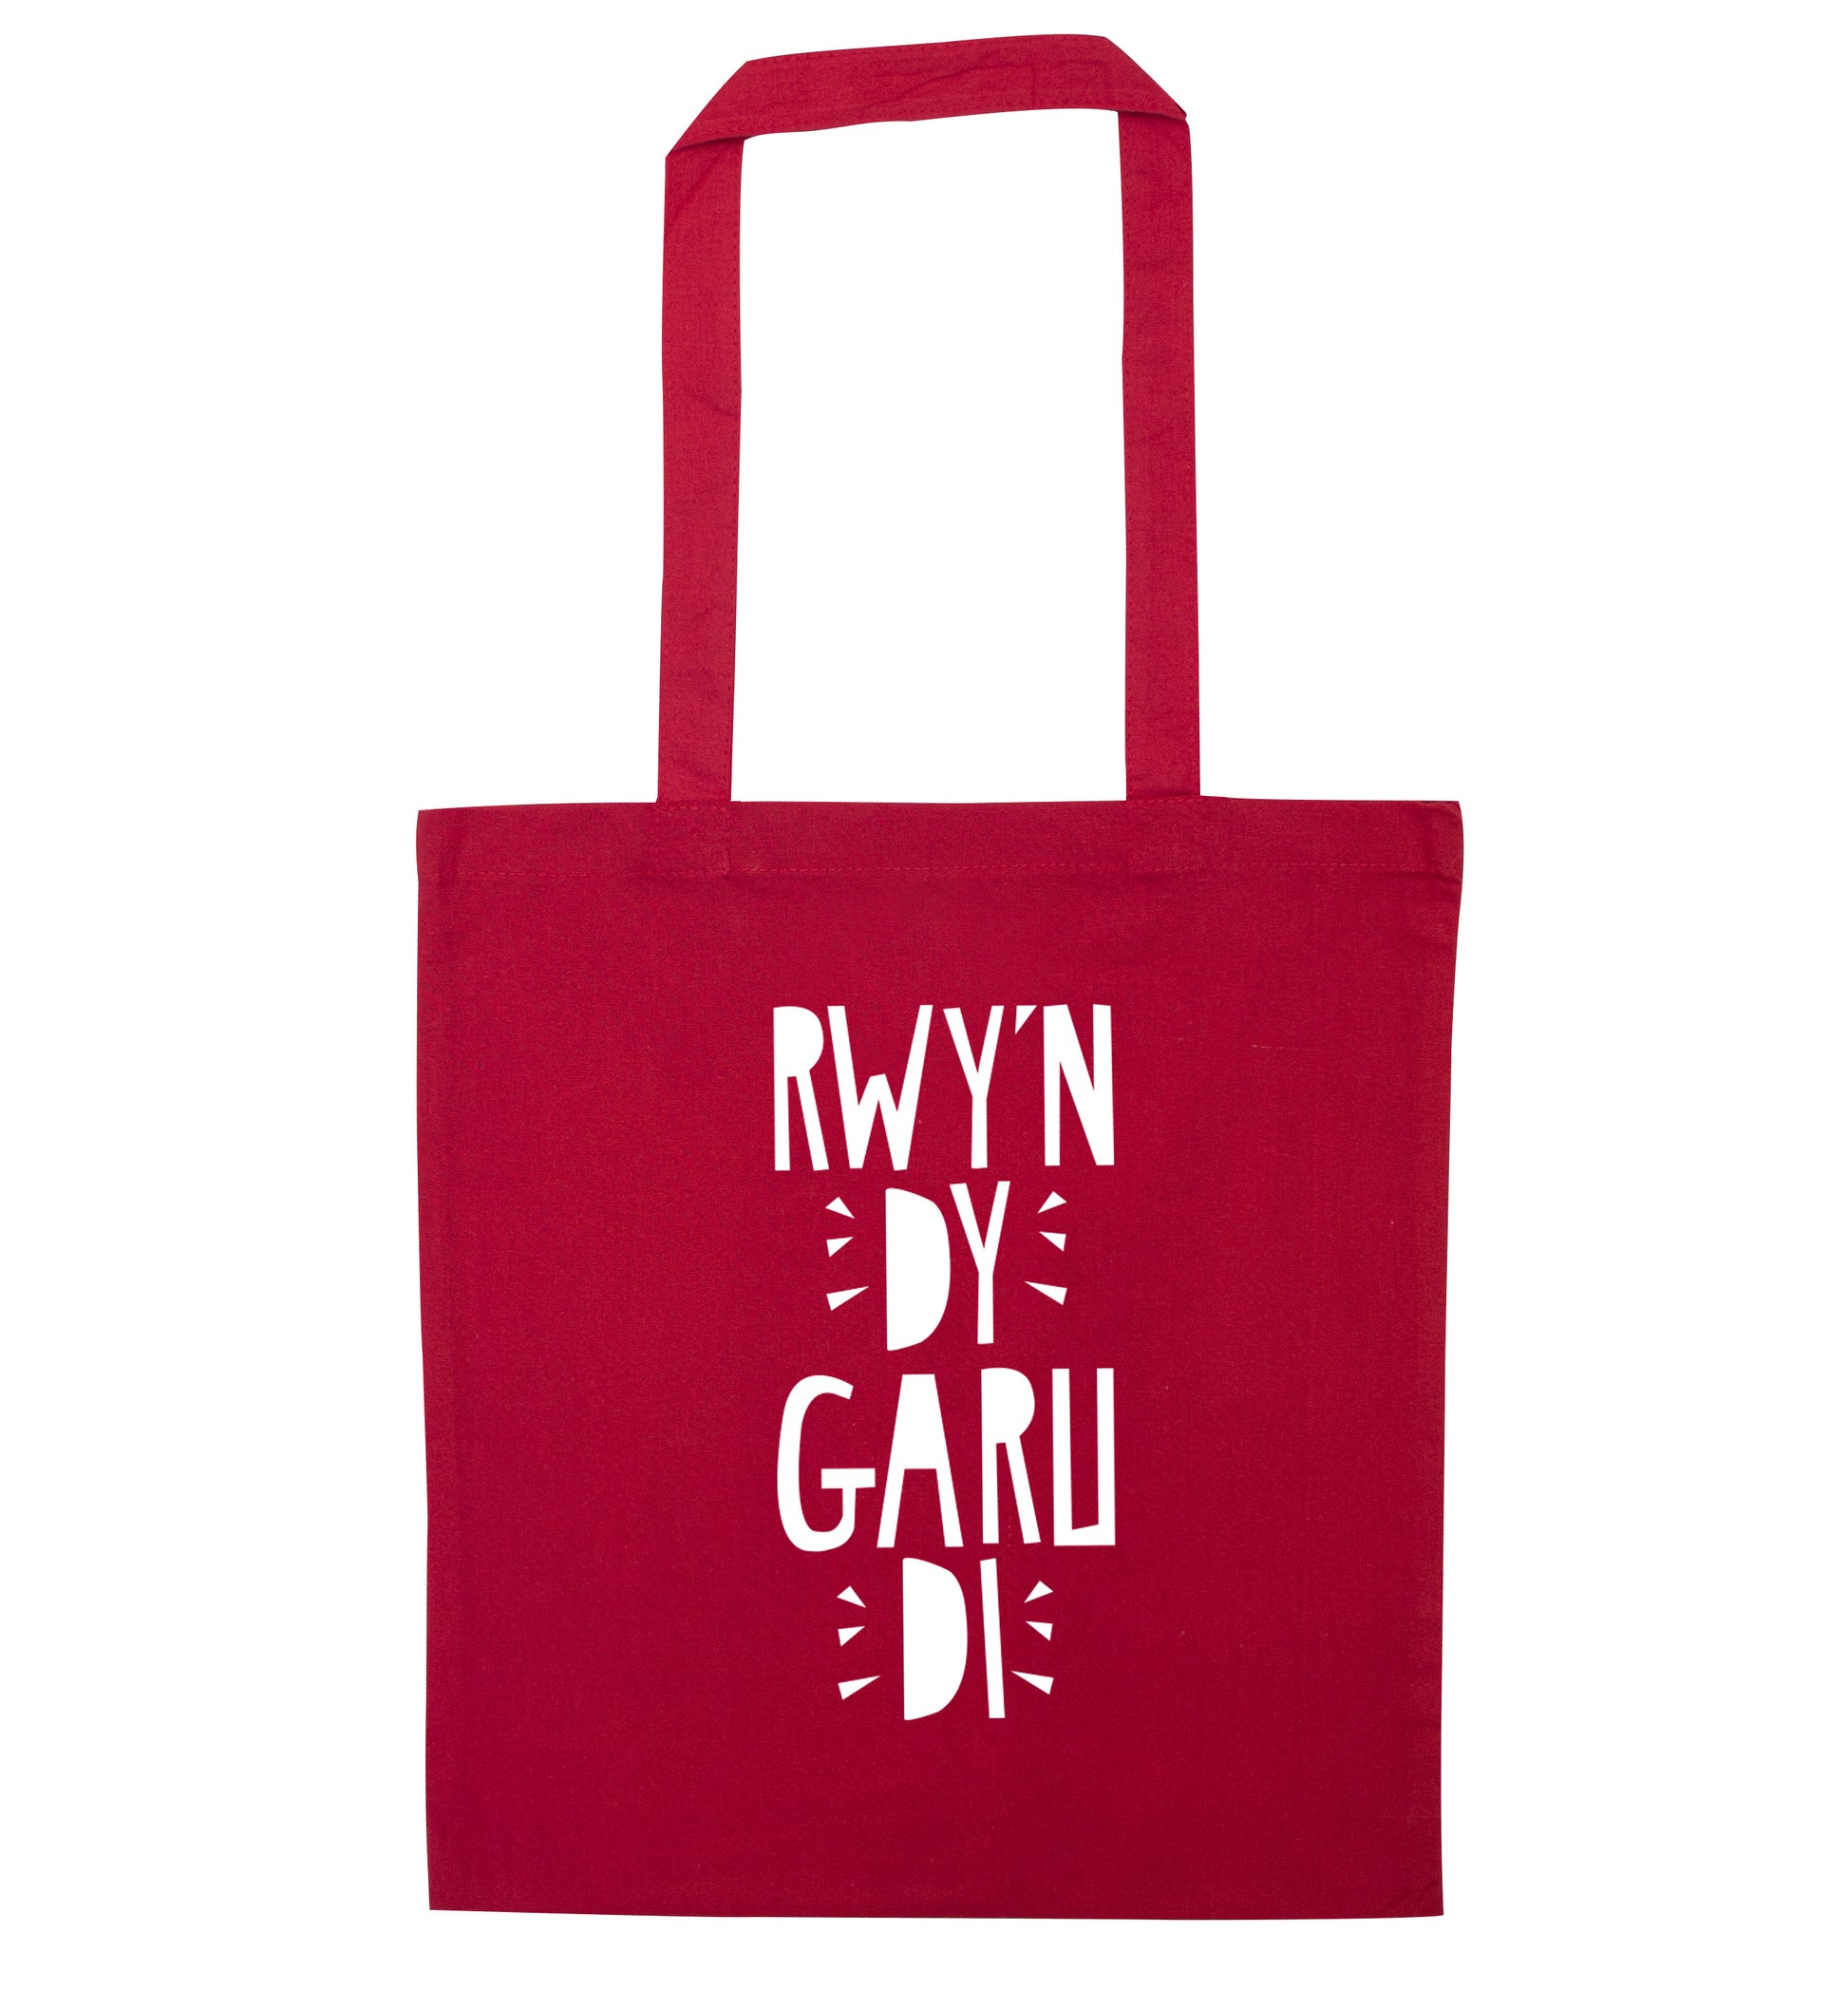 Rwy'n dy garu di - I love you red tote bag